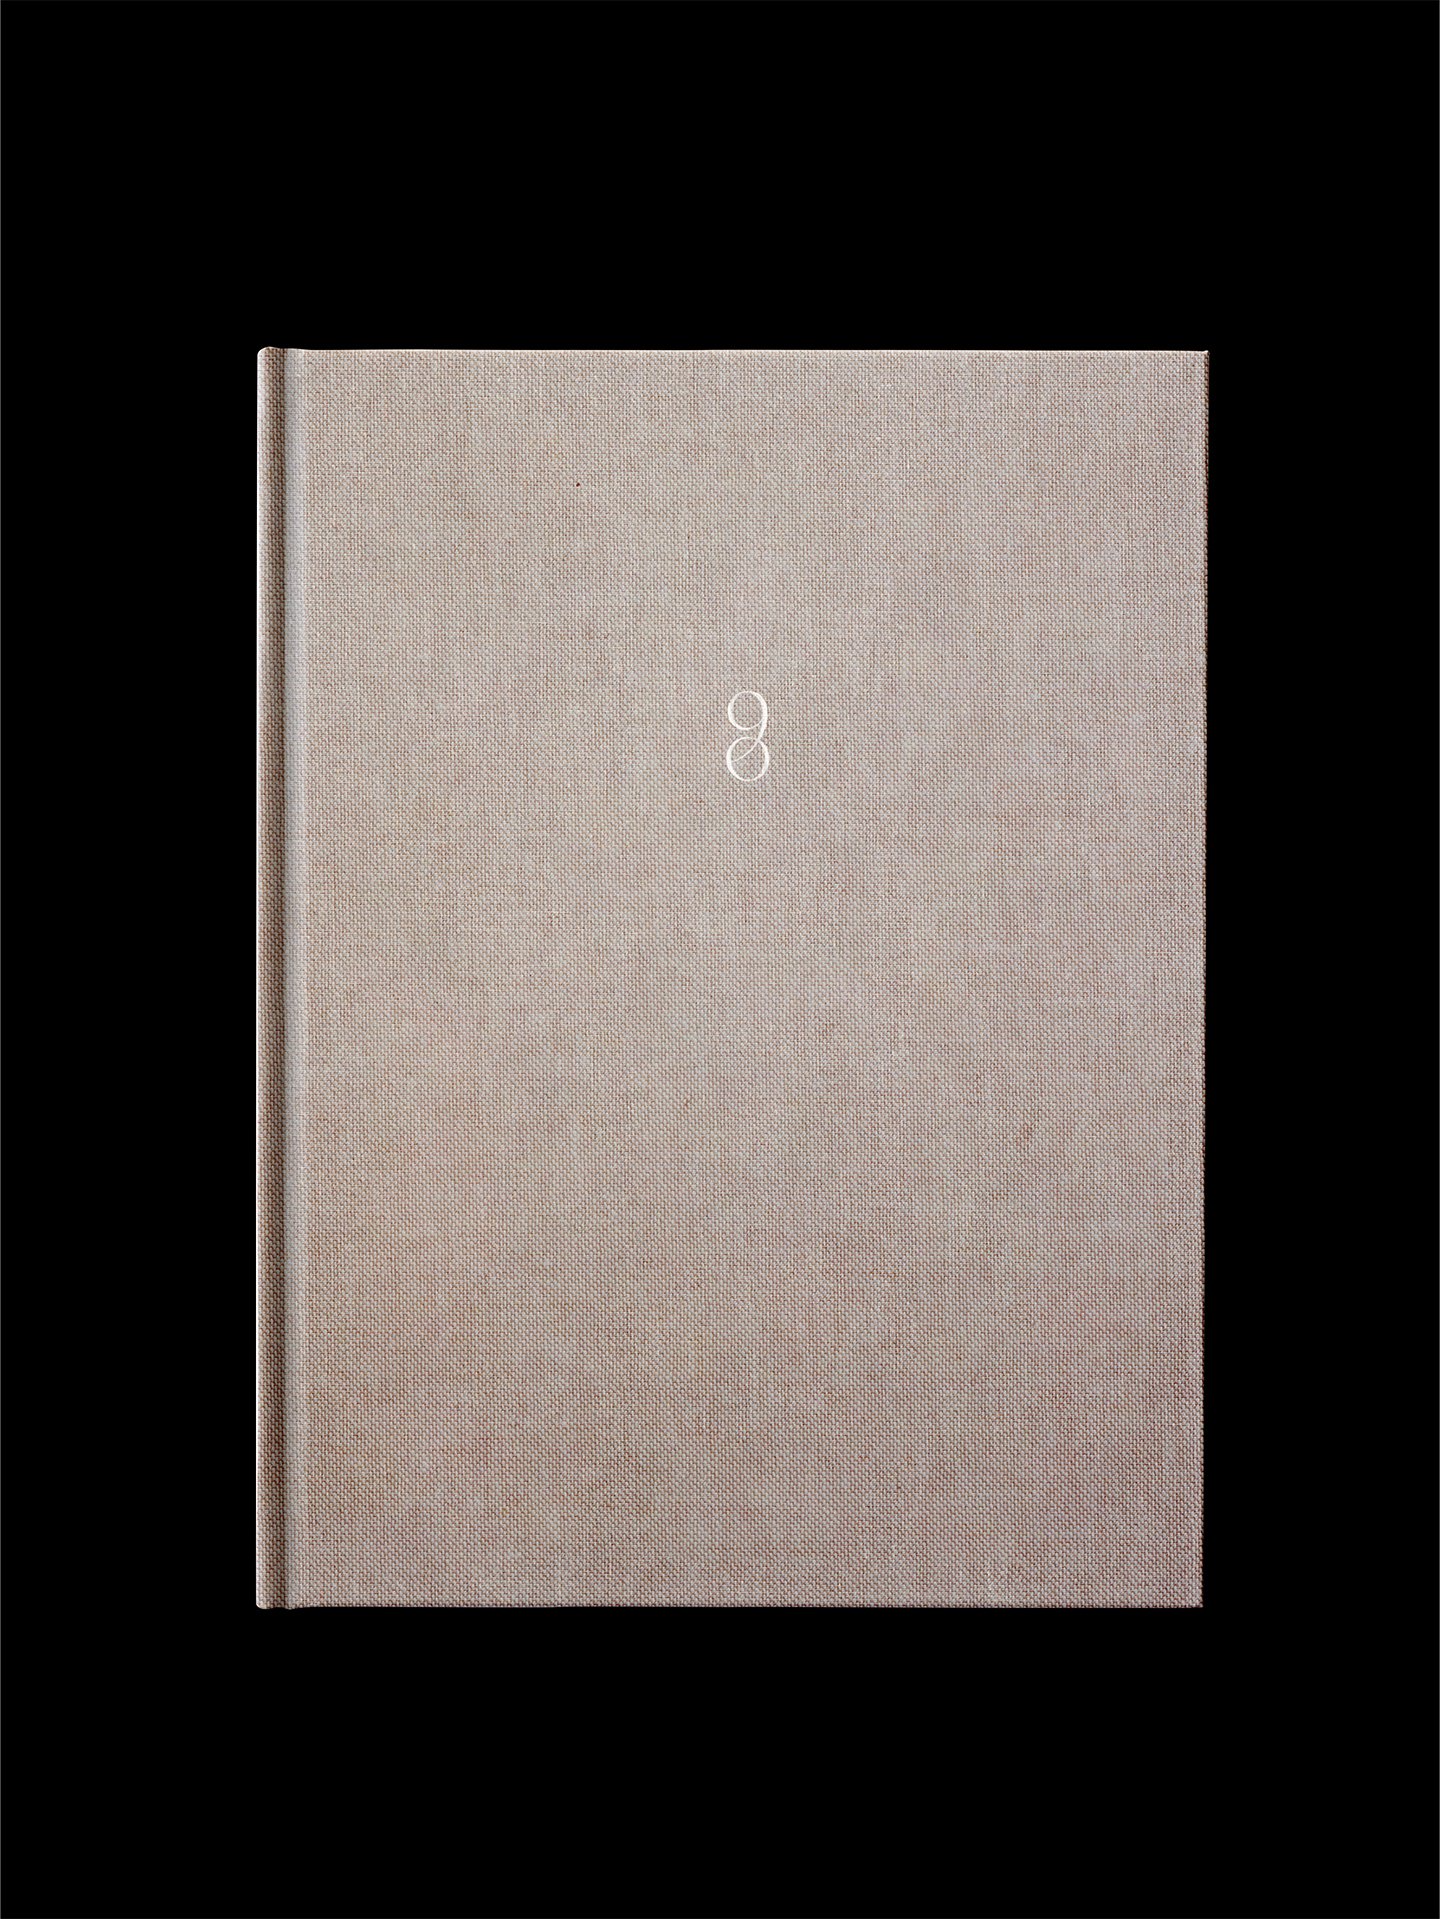 1440x1919-Ninety Percent Harrods Book_0012_Ninety Percent Harrods Book-07.jpg